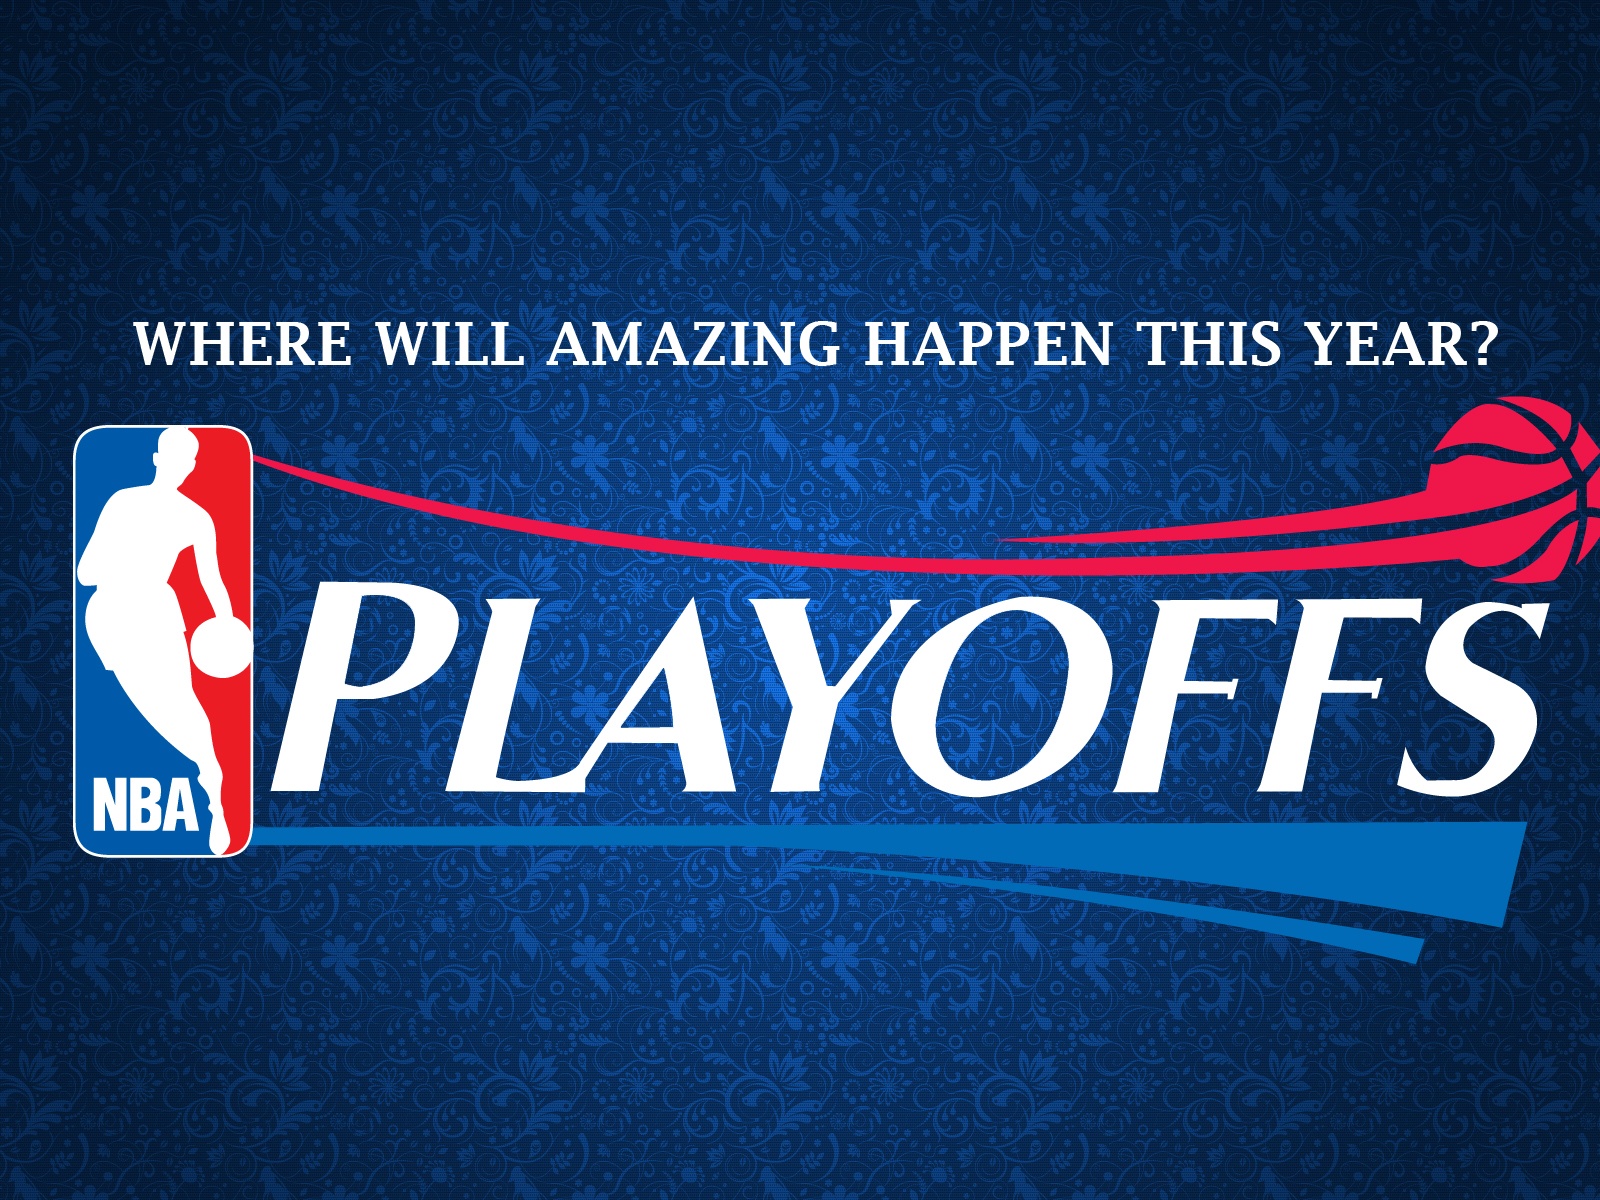 Amazing happens. NBA playoffs. NBA playoff логотип. Play off NBA. Плей офф НБА.